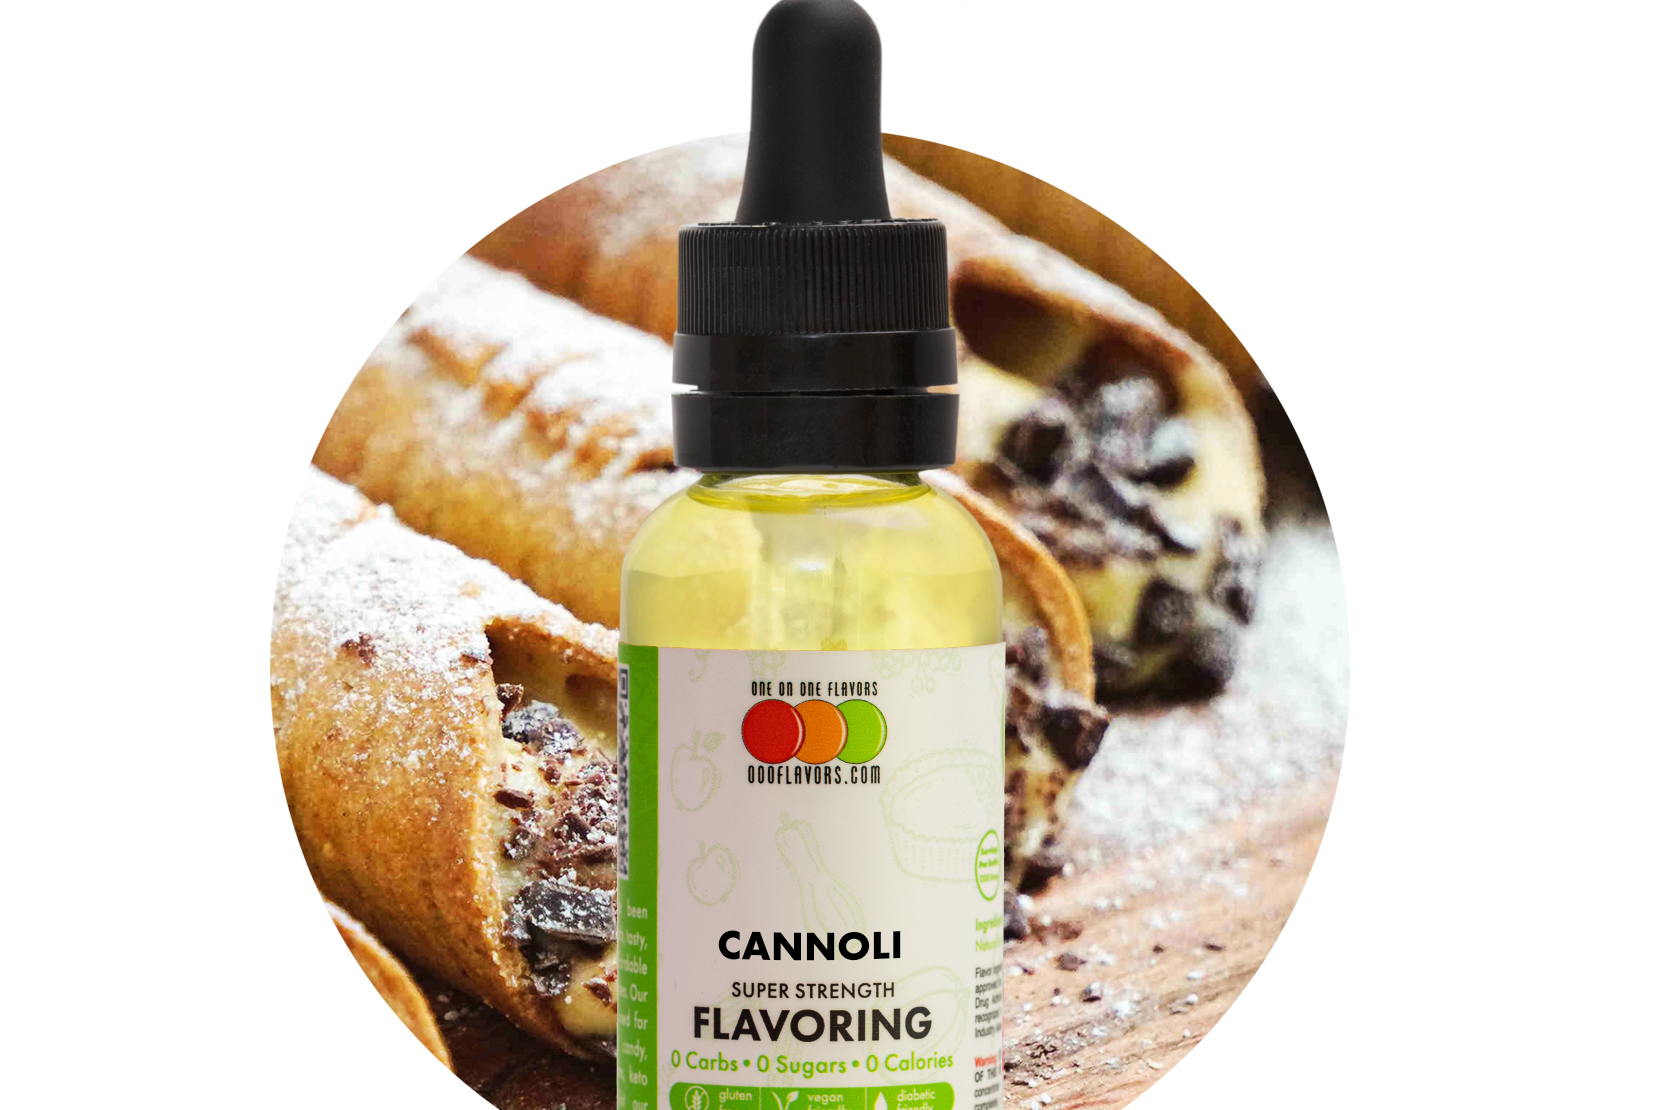 Cannoli Flavoring